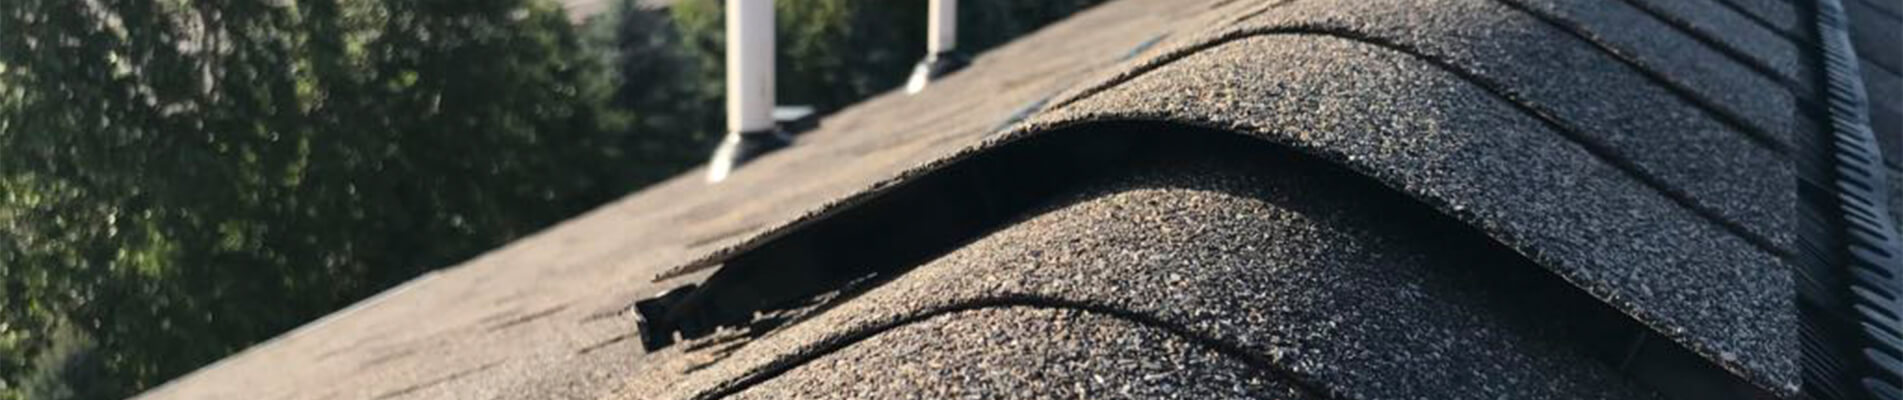 professional-roofing-siding-repairs.jpg